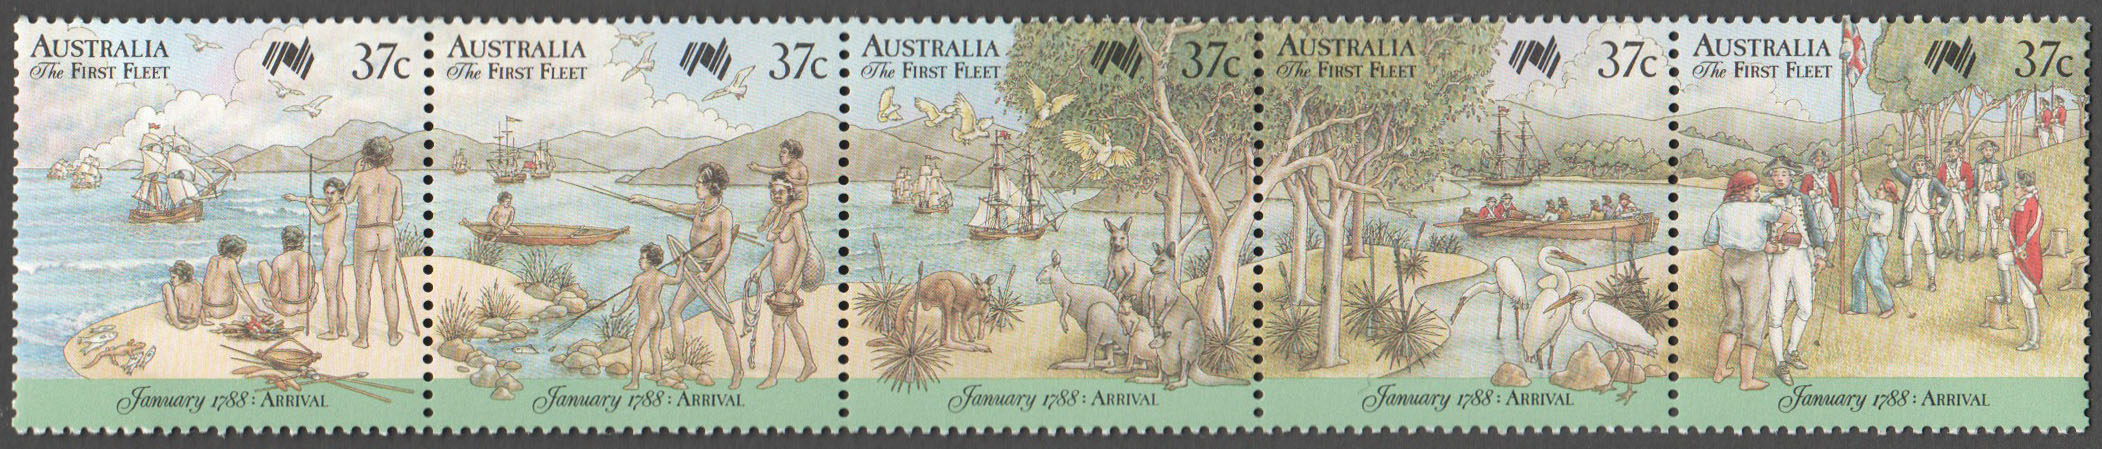 Australia Scott 1030 MNH (A2-12) - Click Image to Close